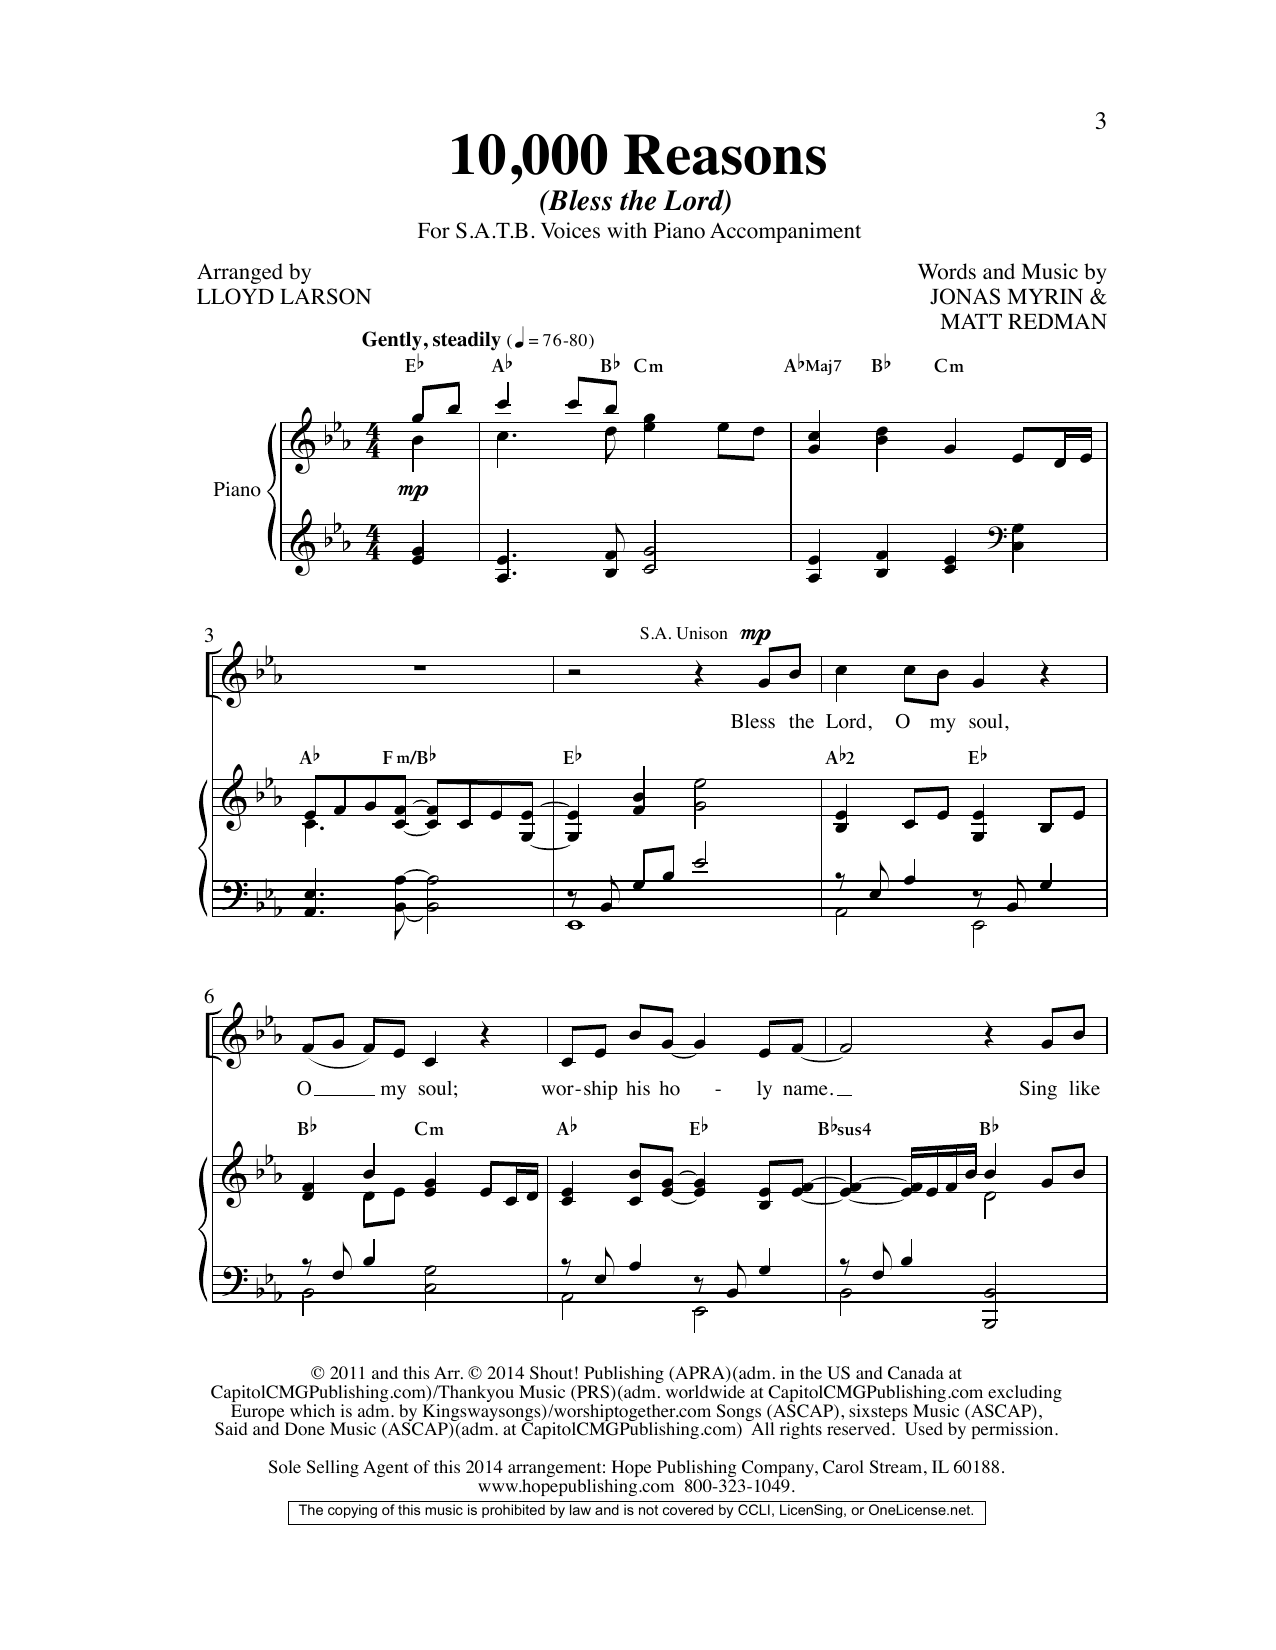 Matt Redman 10,000 Reasons (Bless the Lord) (arr. Lloyd Larson) sheet music notes and chords arranged for SATB Choir